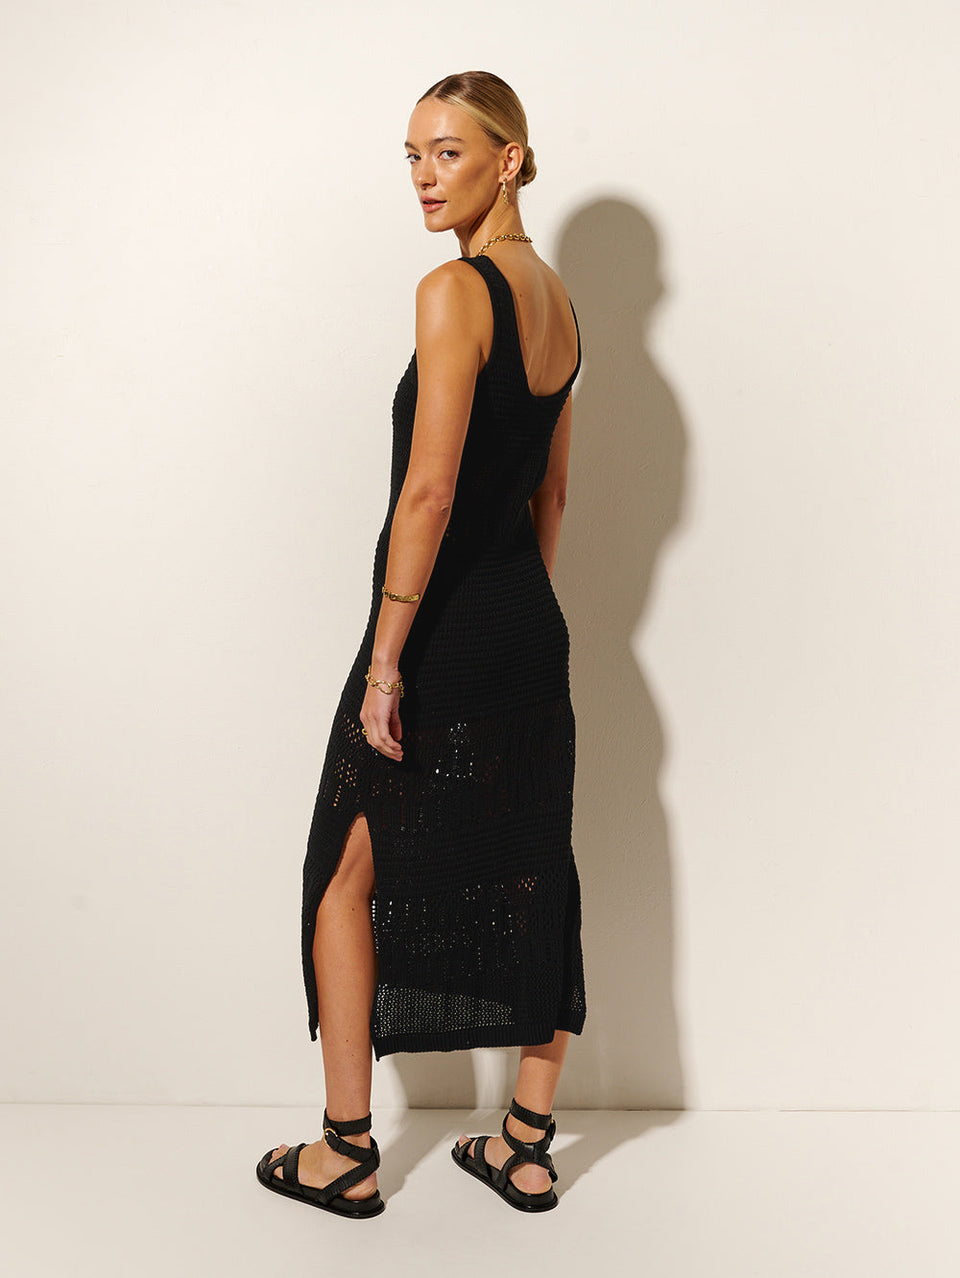 Riza Crochet Midi Dress KIVARI | Model wears black crochet midi dress back view